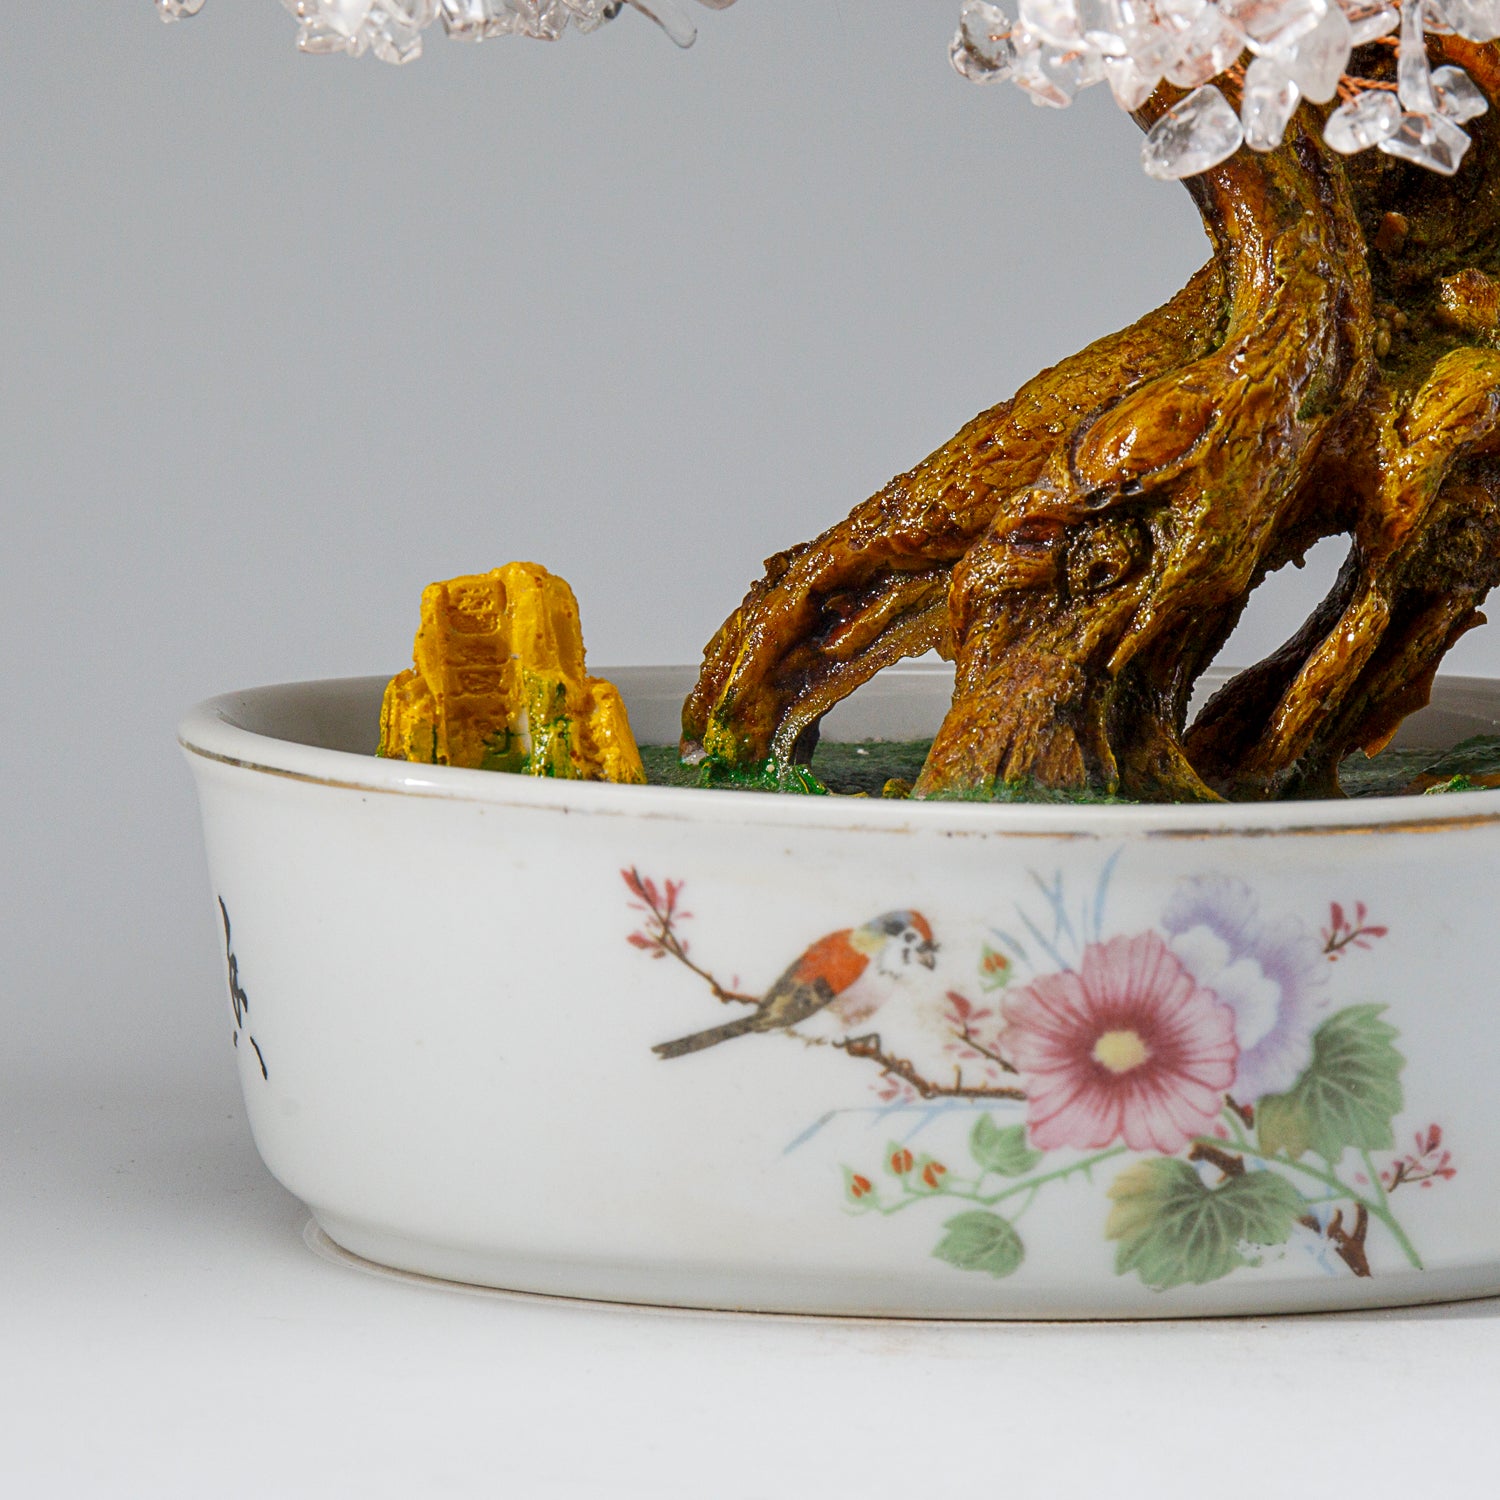 Genuine Quartz Gemstone Bonsai Tree in Oval Ceramic Pot (10” Tall)